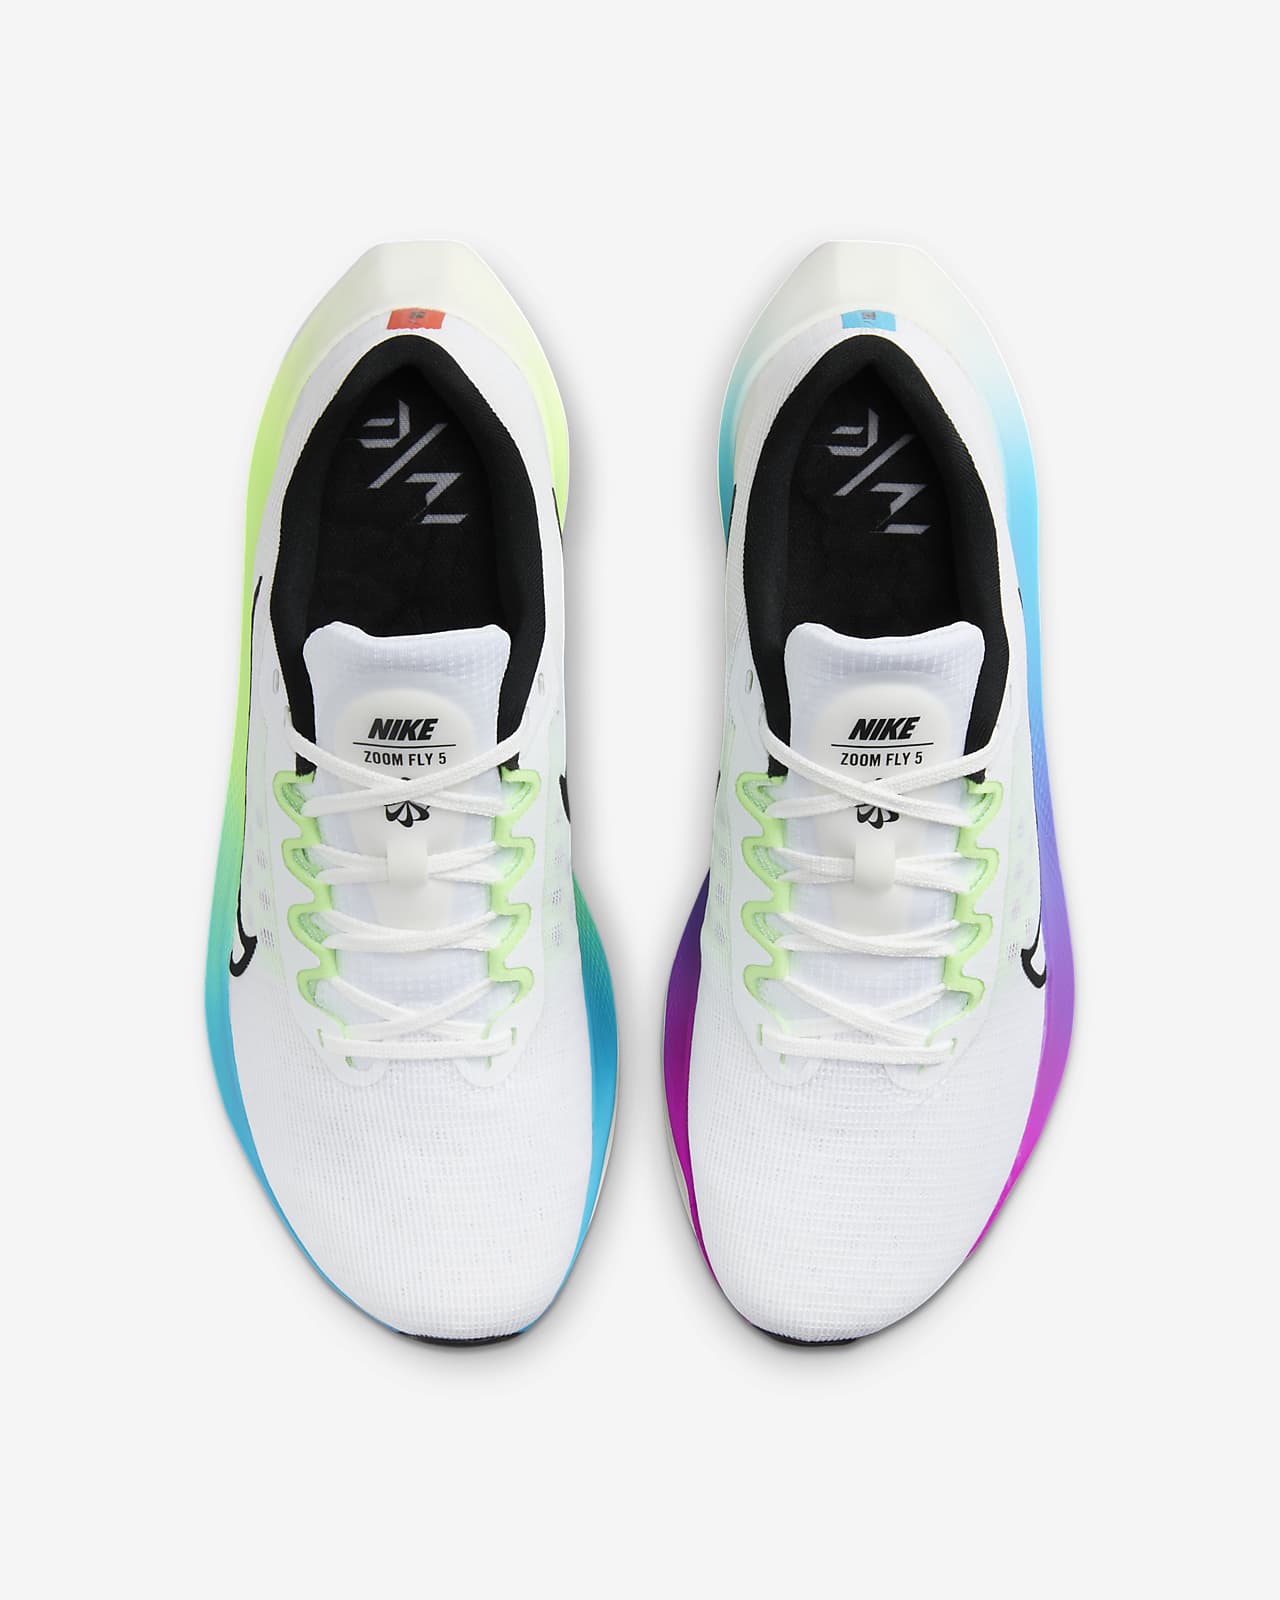 verdrietig infrastructuur opvolger Nike Zoom Fly 5 Men's Road Running Shoes. Nike.com